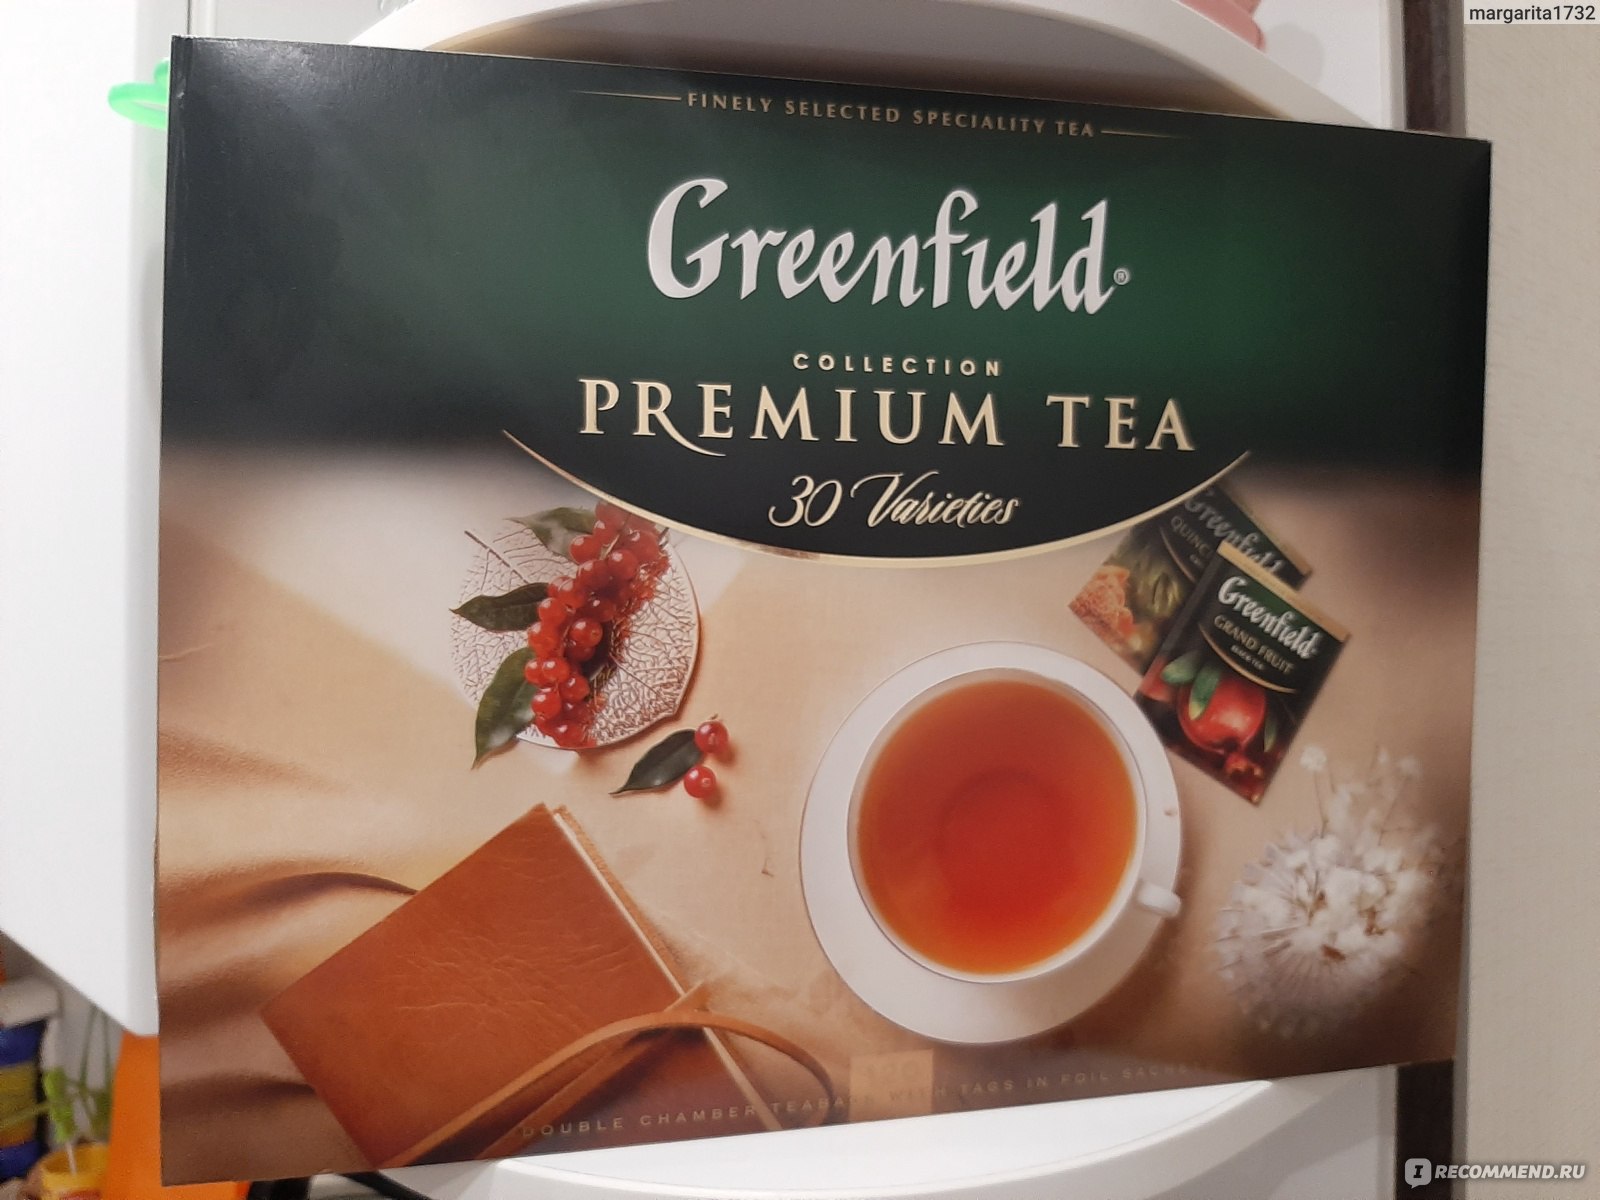 Greenfield collection. Greenfield Premium Tea collection. Greenfield Premium 120 Greenfield Tea collection. Greenfield Premium Tea collection, 30 видов,. Чай Гринфилд премиум коллекция.